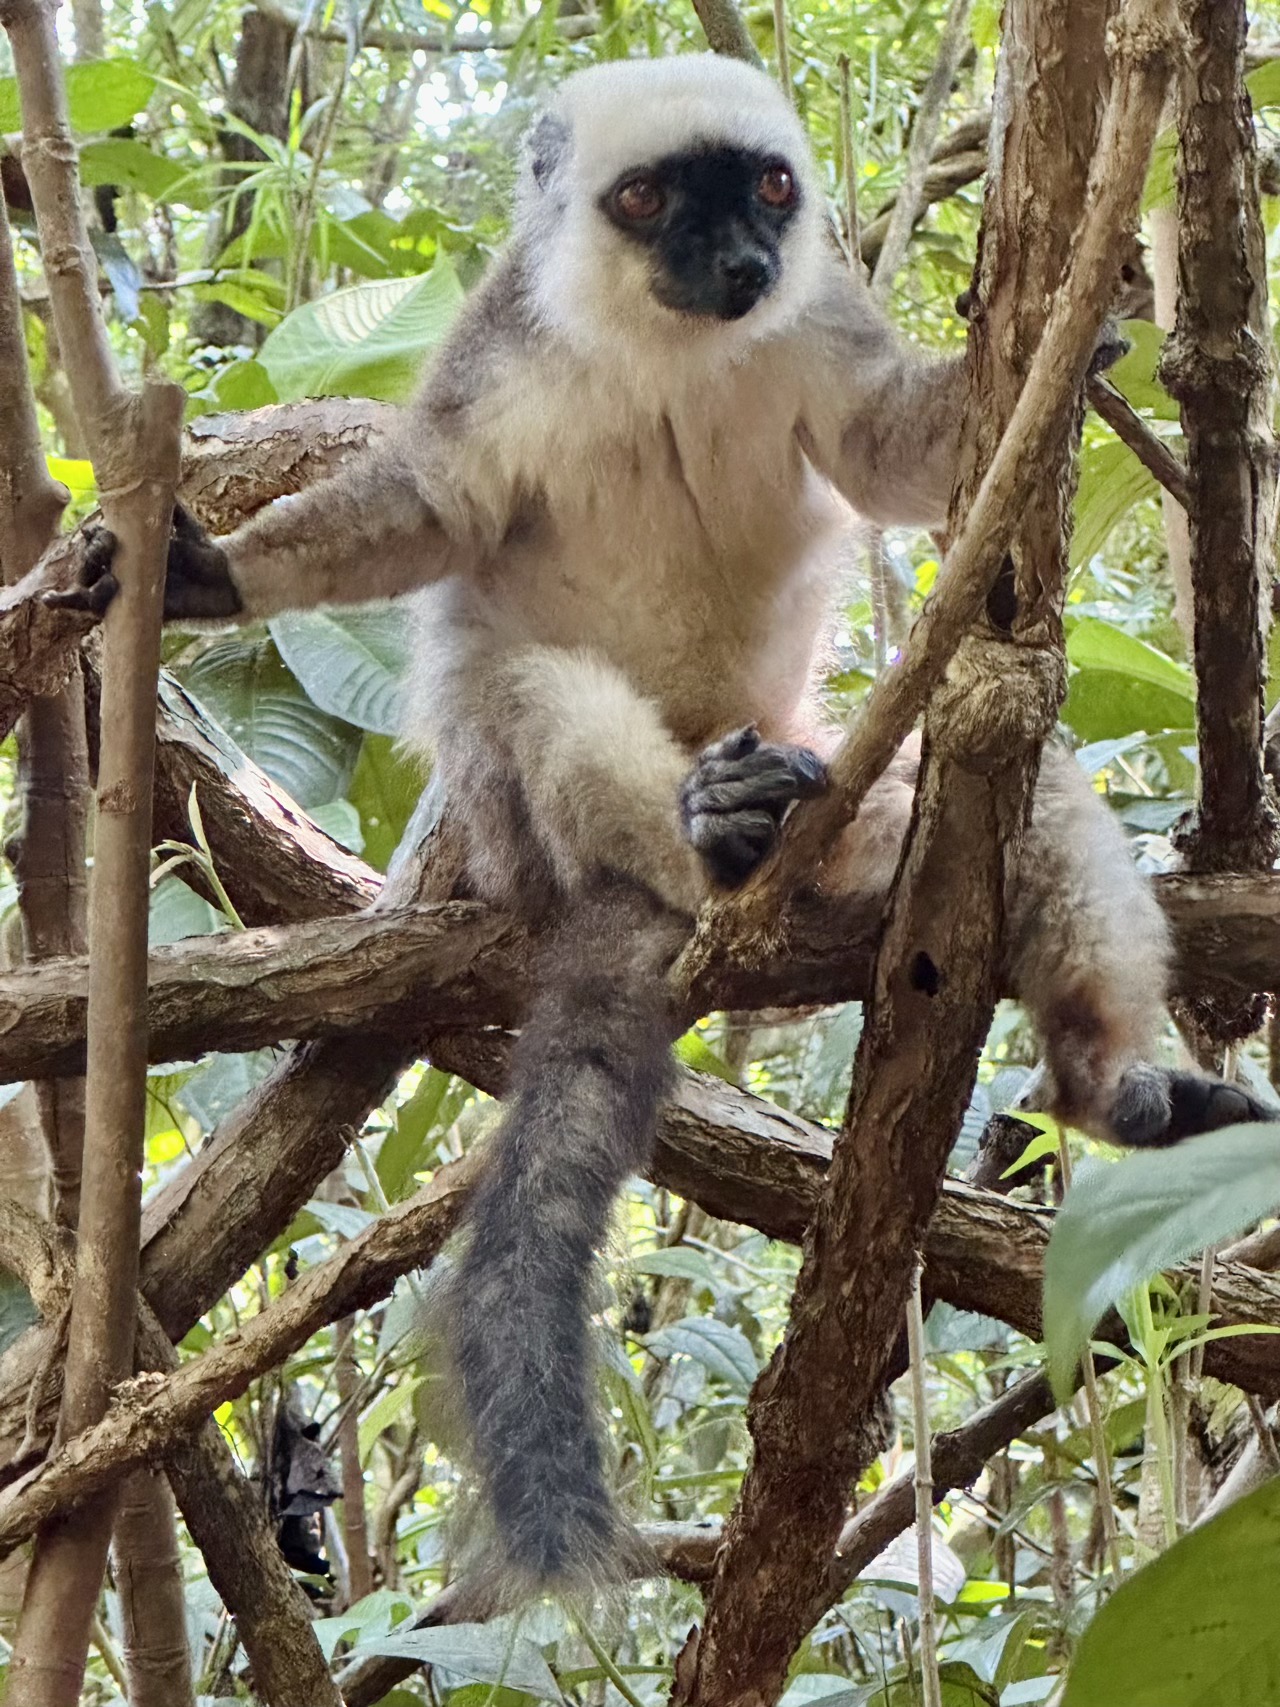 A very friendly lemur